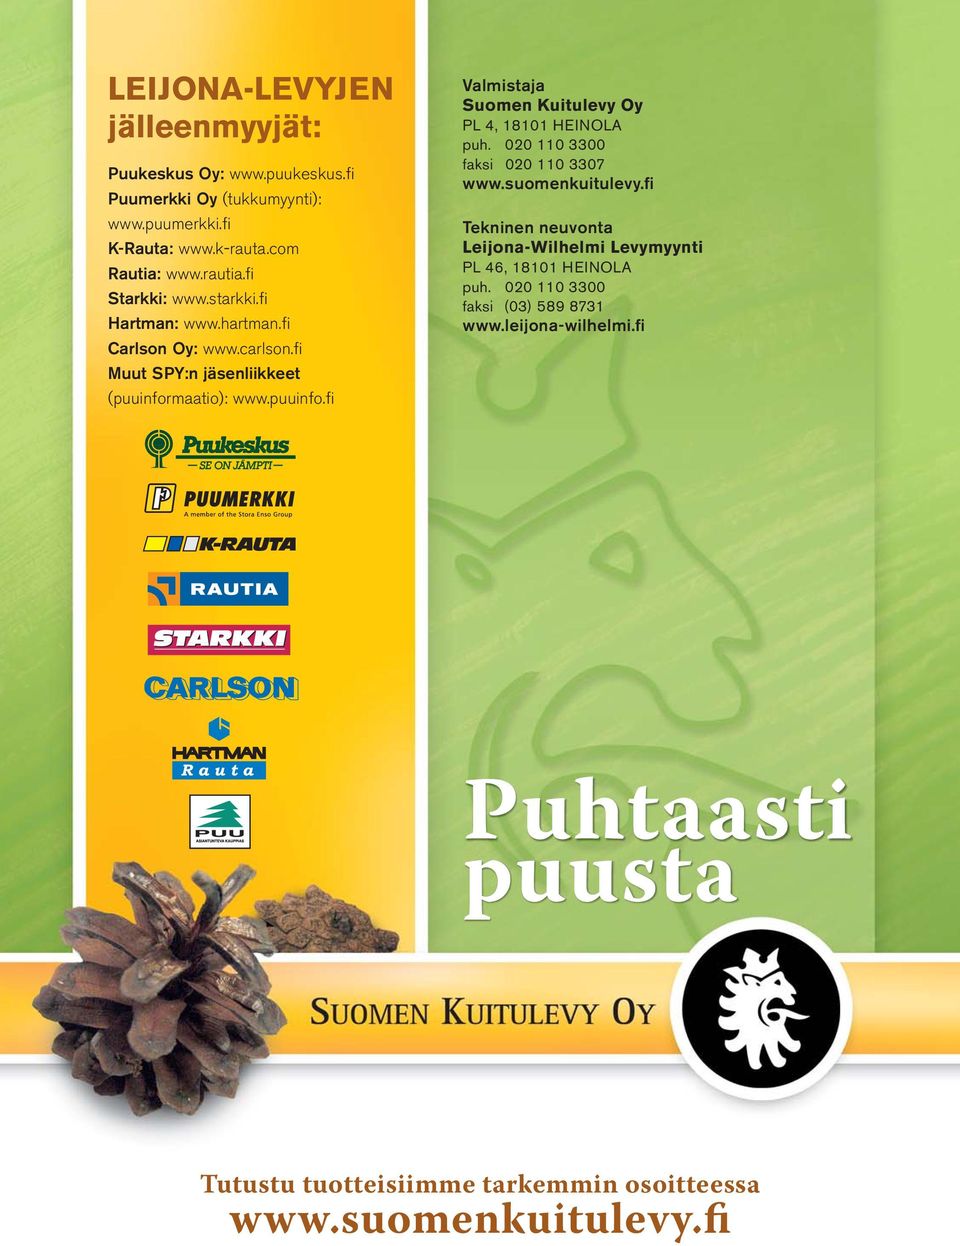 maatio): www.puuinfo.fi Valmistaja Suomen Kuitulevy Oy PL 4, 18101 HEINOLA puh. 020 110 3300 faksi 020 110 3307 www.suomenkuitulevy.